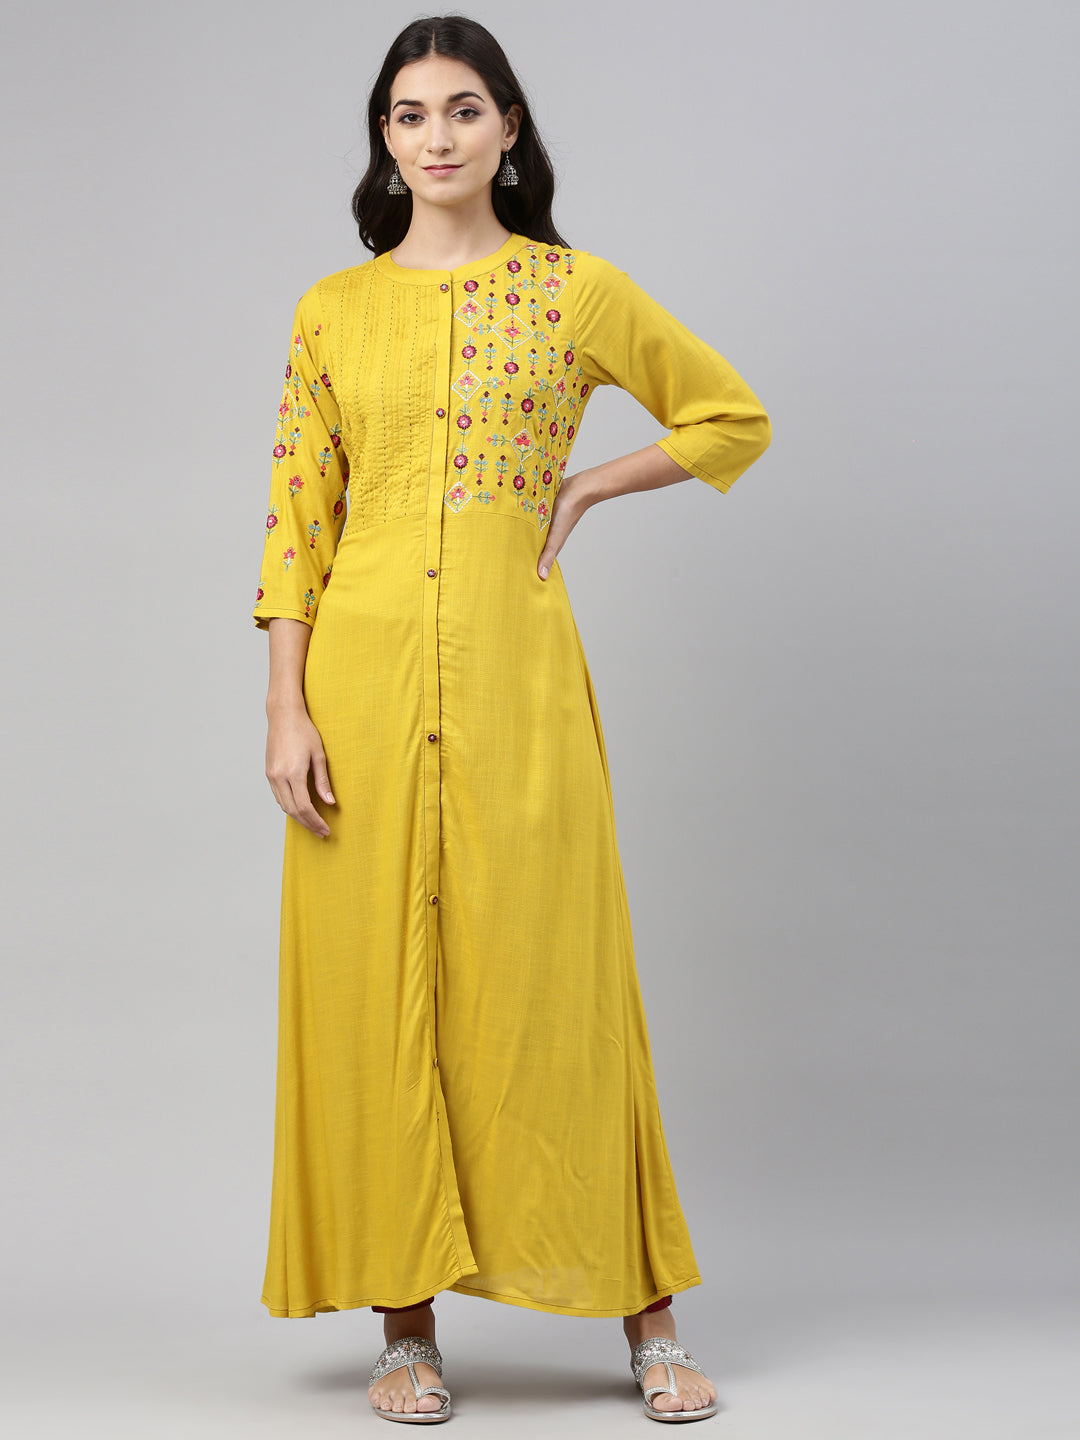 Neeru's Mustard Color Slub Rayon Fabric Tunic